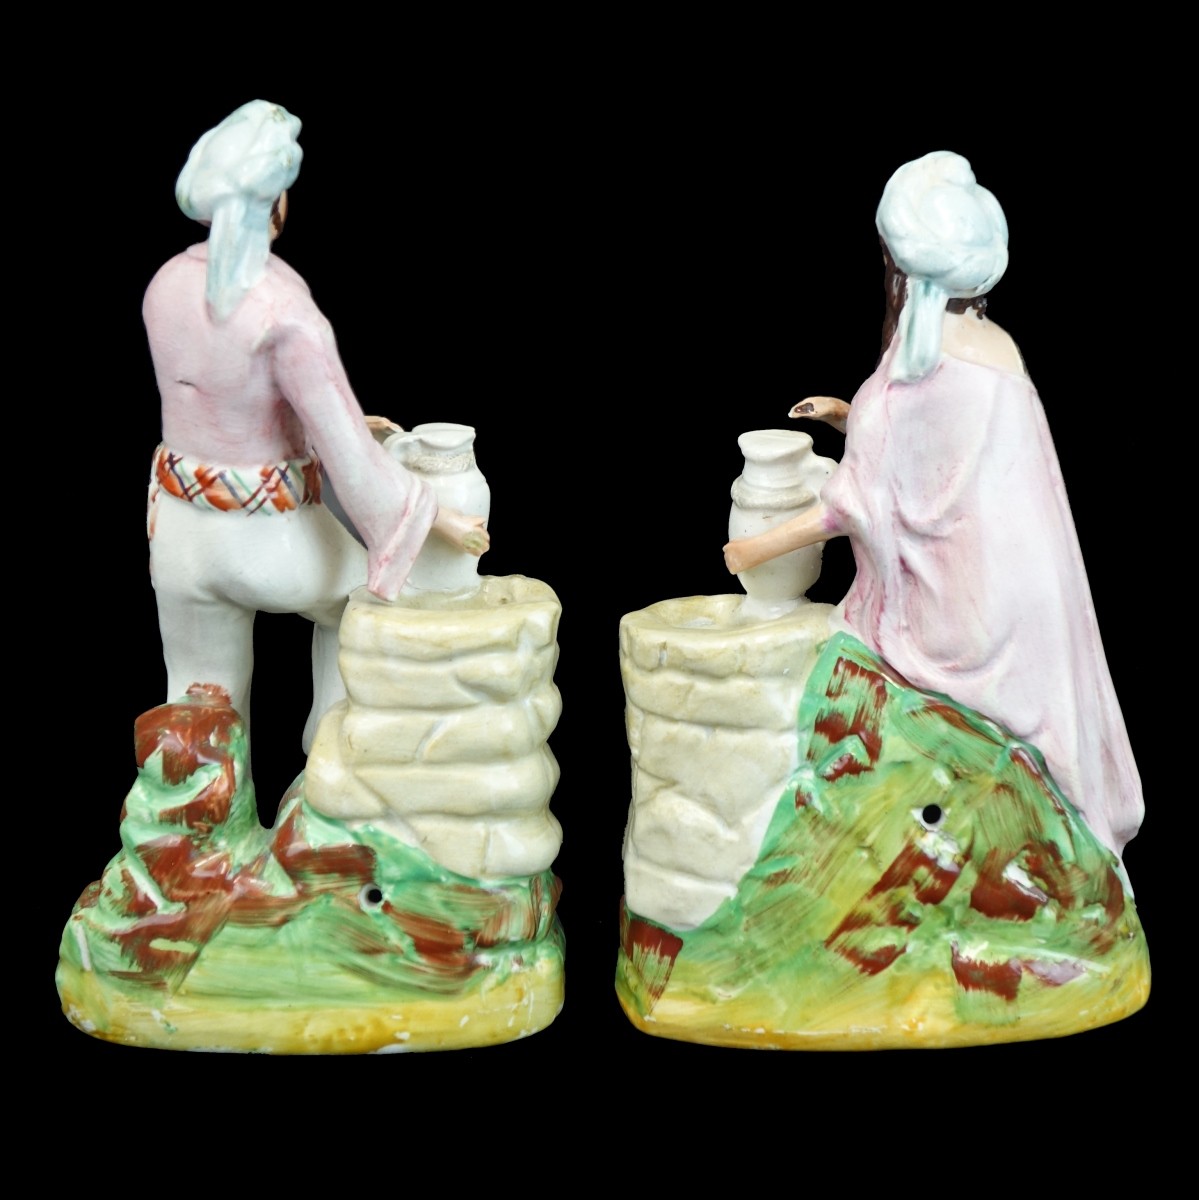 Pair of Antique Staffordshire Figurines